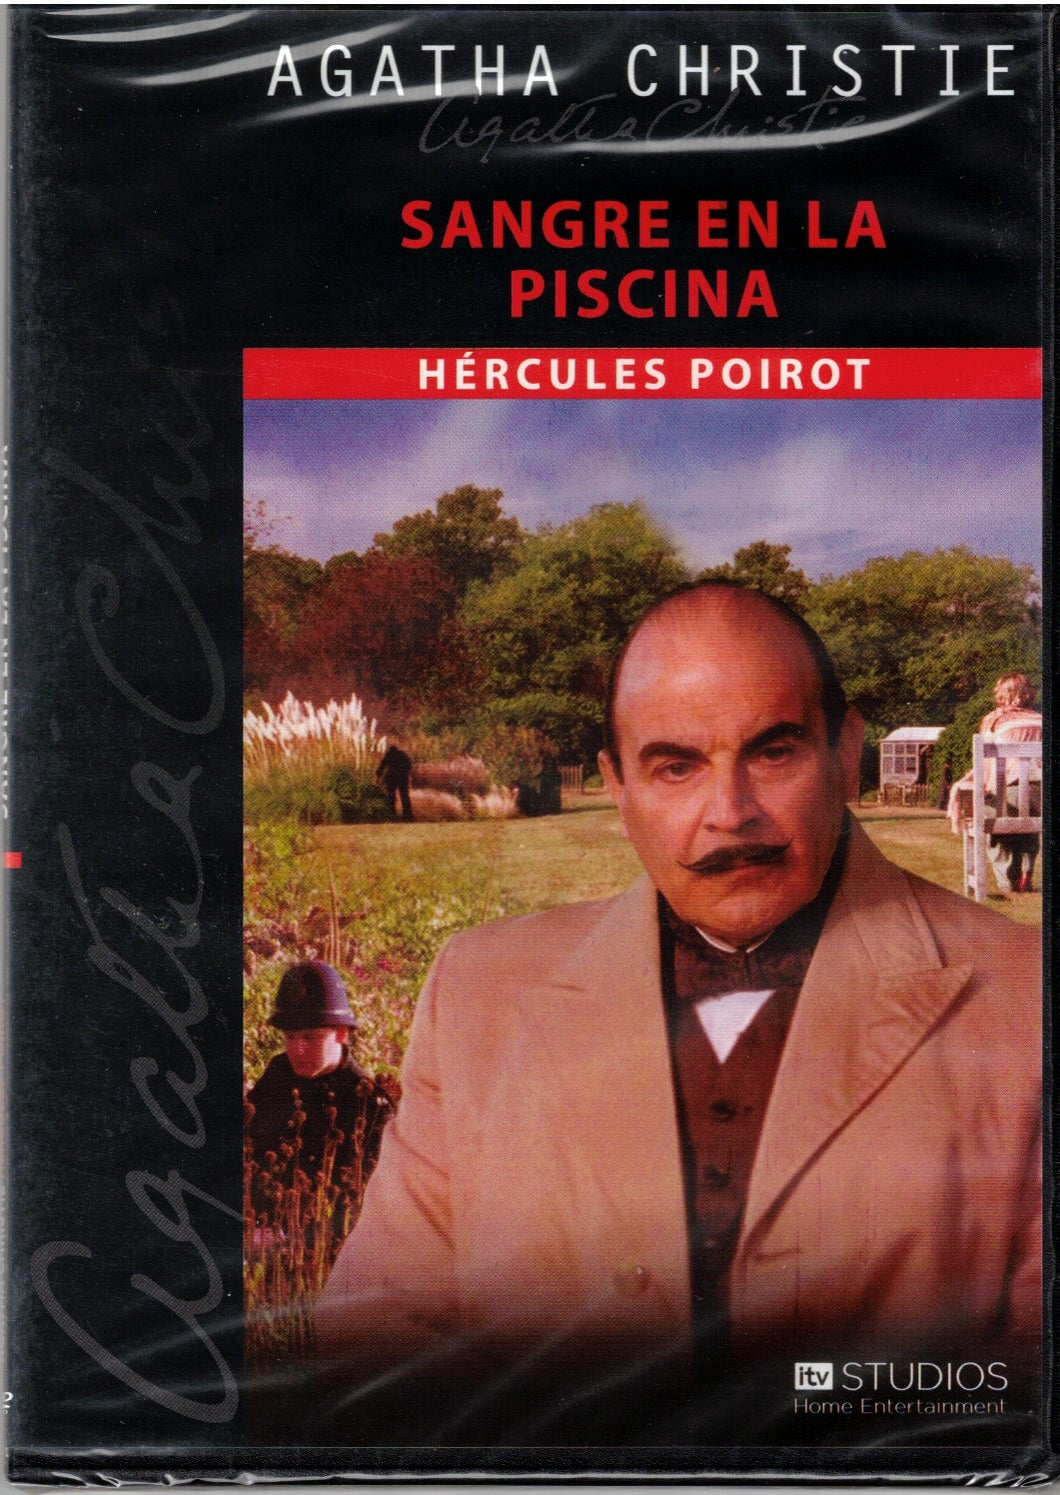 Agatha Christie: Poirot - Sangre en la piscina (DVD Caja Slim Nuevo)